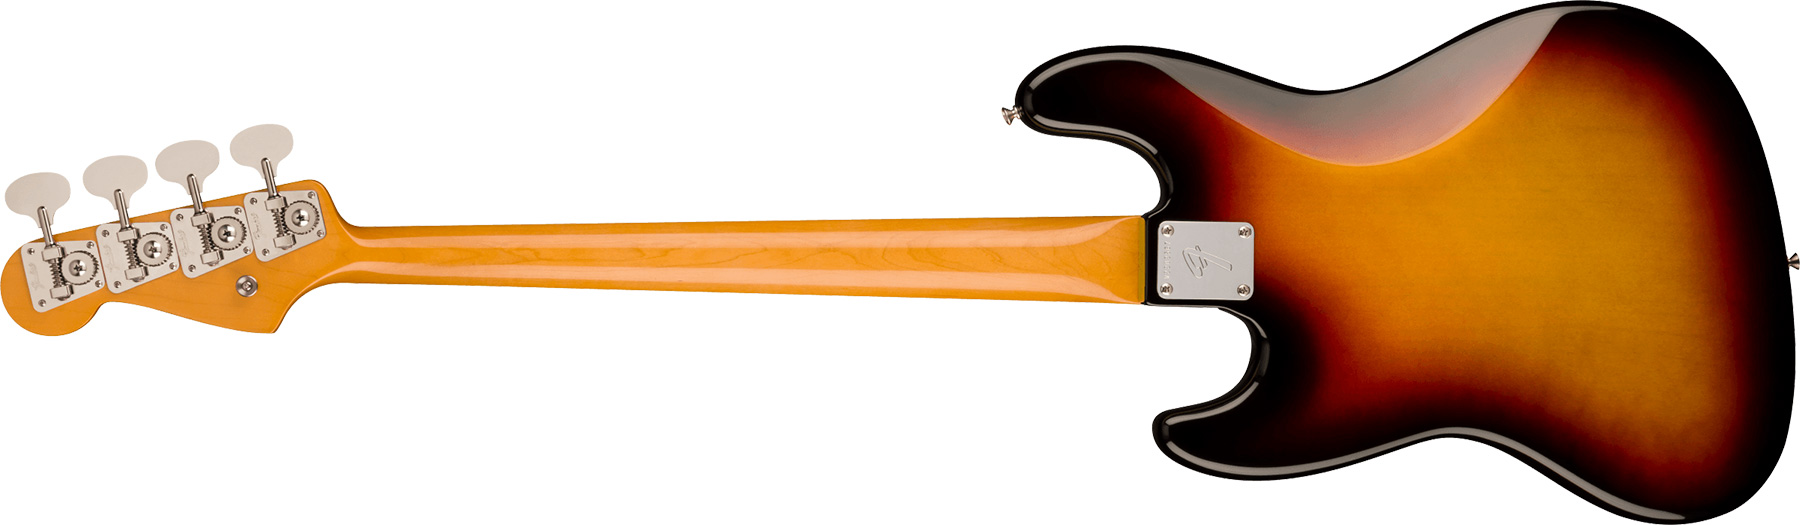 Fender Jazz Bass 1966 American Vintage Ii Usa Rw - 3-color Sunburst - Basse Électrique Solid Body - Variation 1